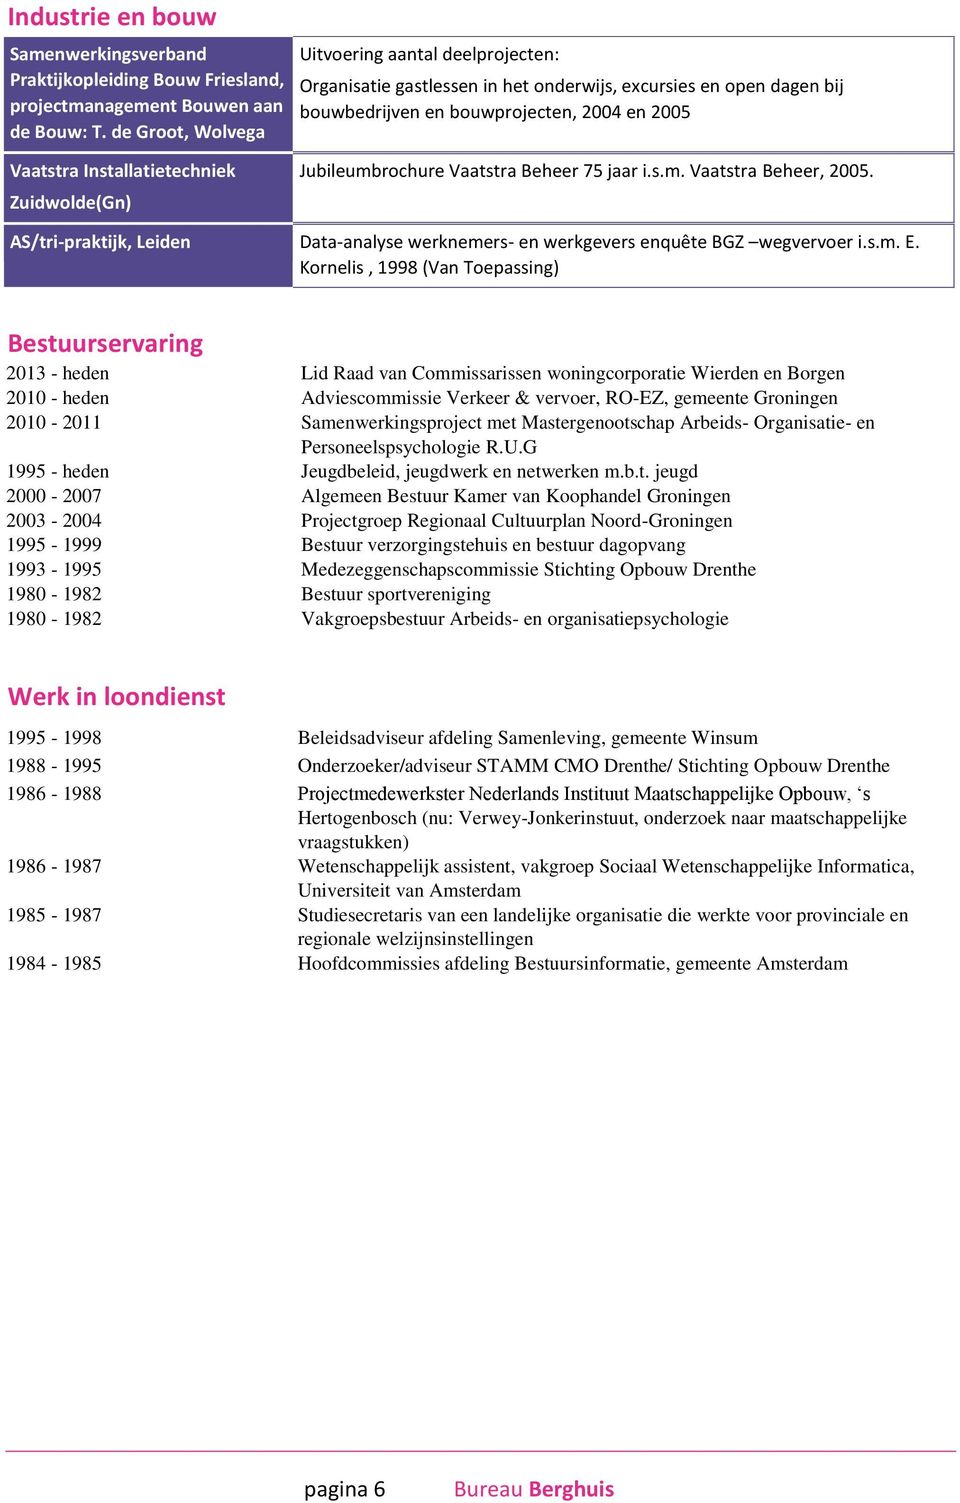 Zuidwolde(Gn) Jubileumbrochure Vaatstra Beheer 75 jaar i.s.m. Vaatstra Beheer, 2005. AS/tri-praktijk, Leiden Data-analyse werknemers- en werkgevers enquête BGZ wegvervoer i.s.m. E.